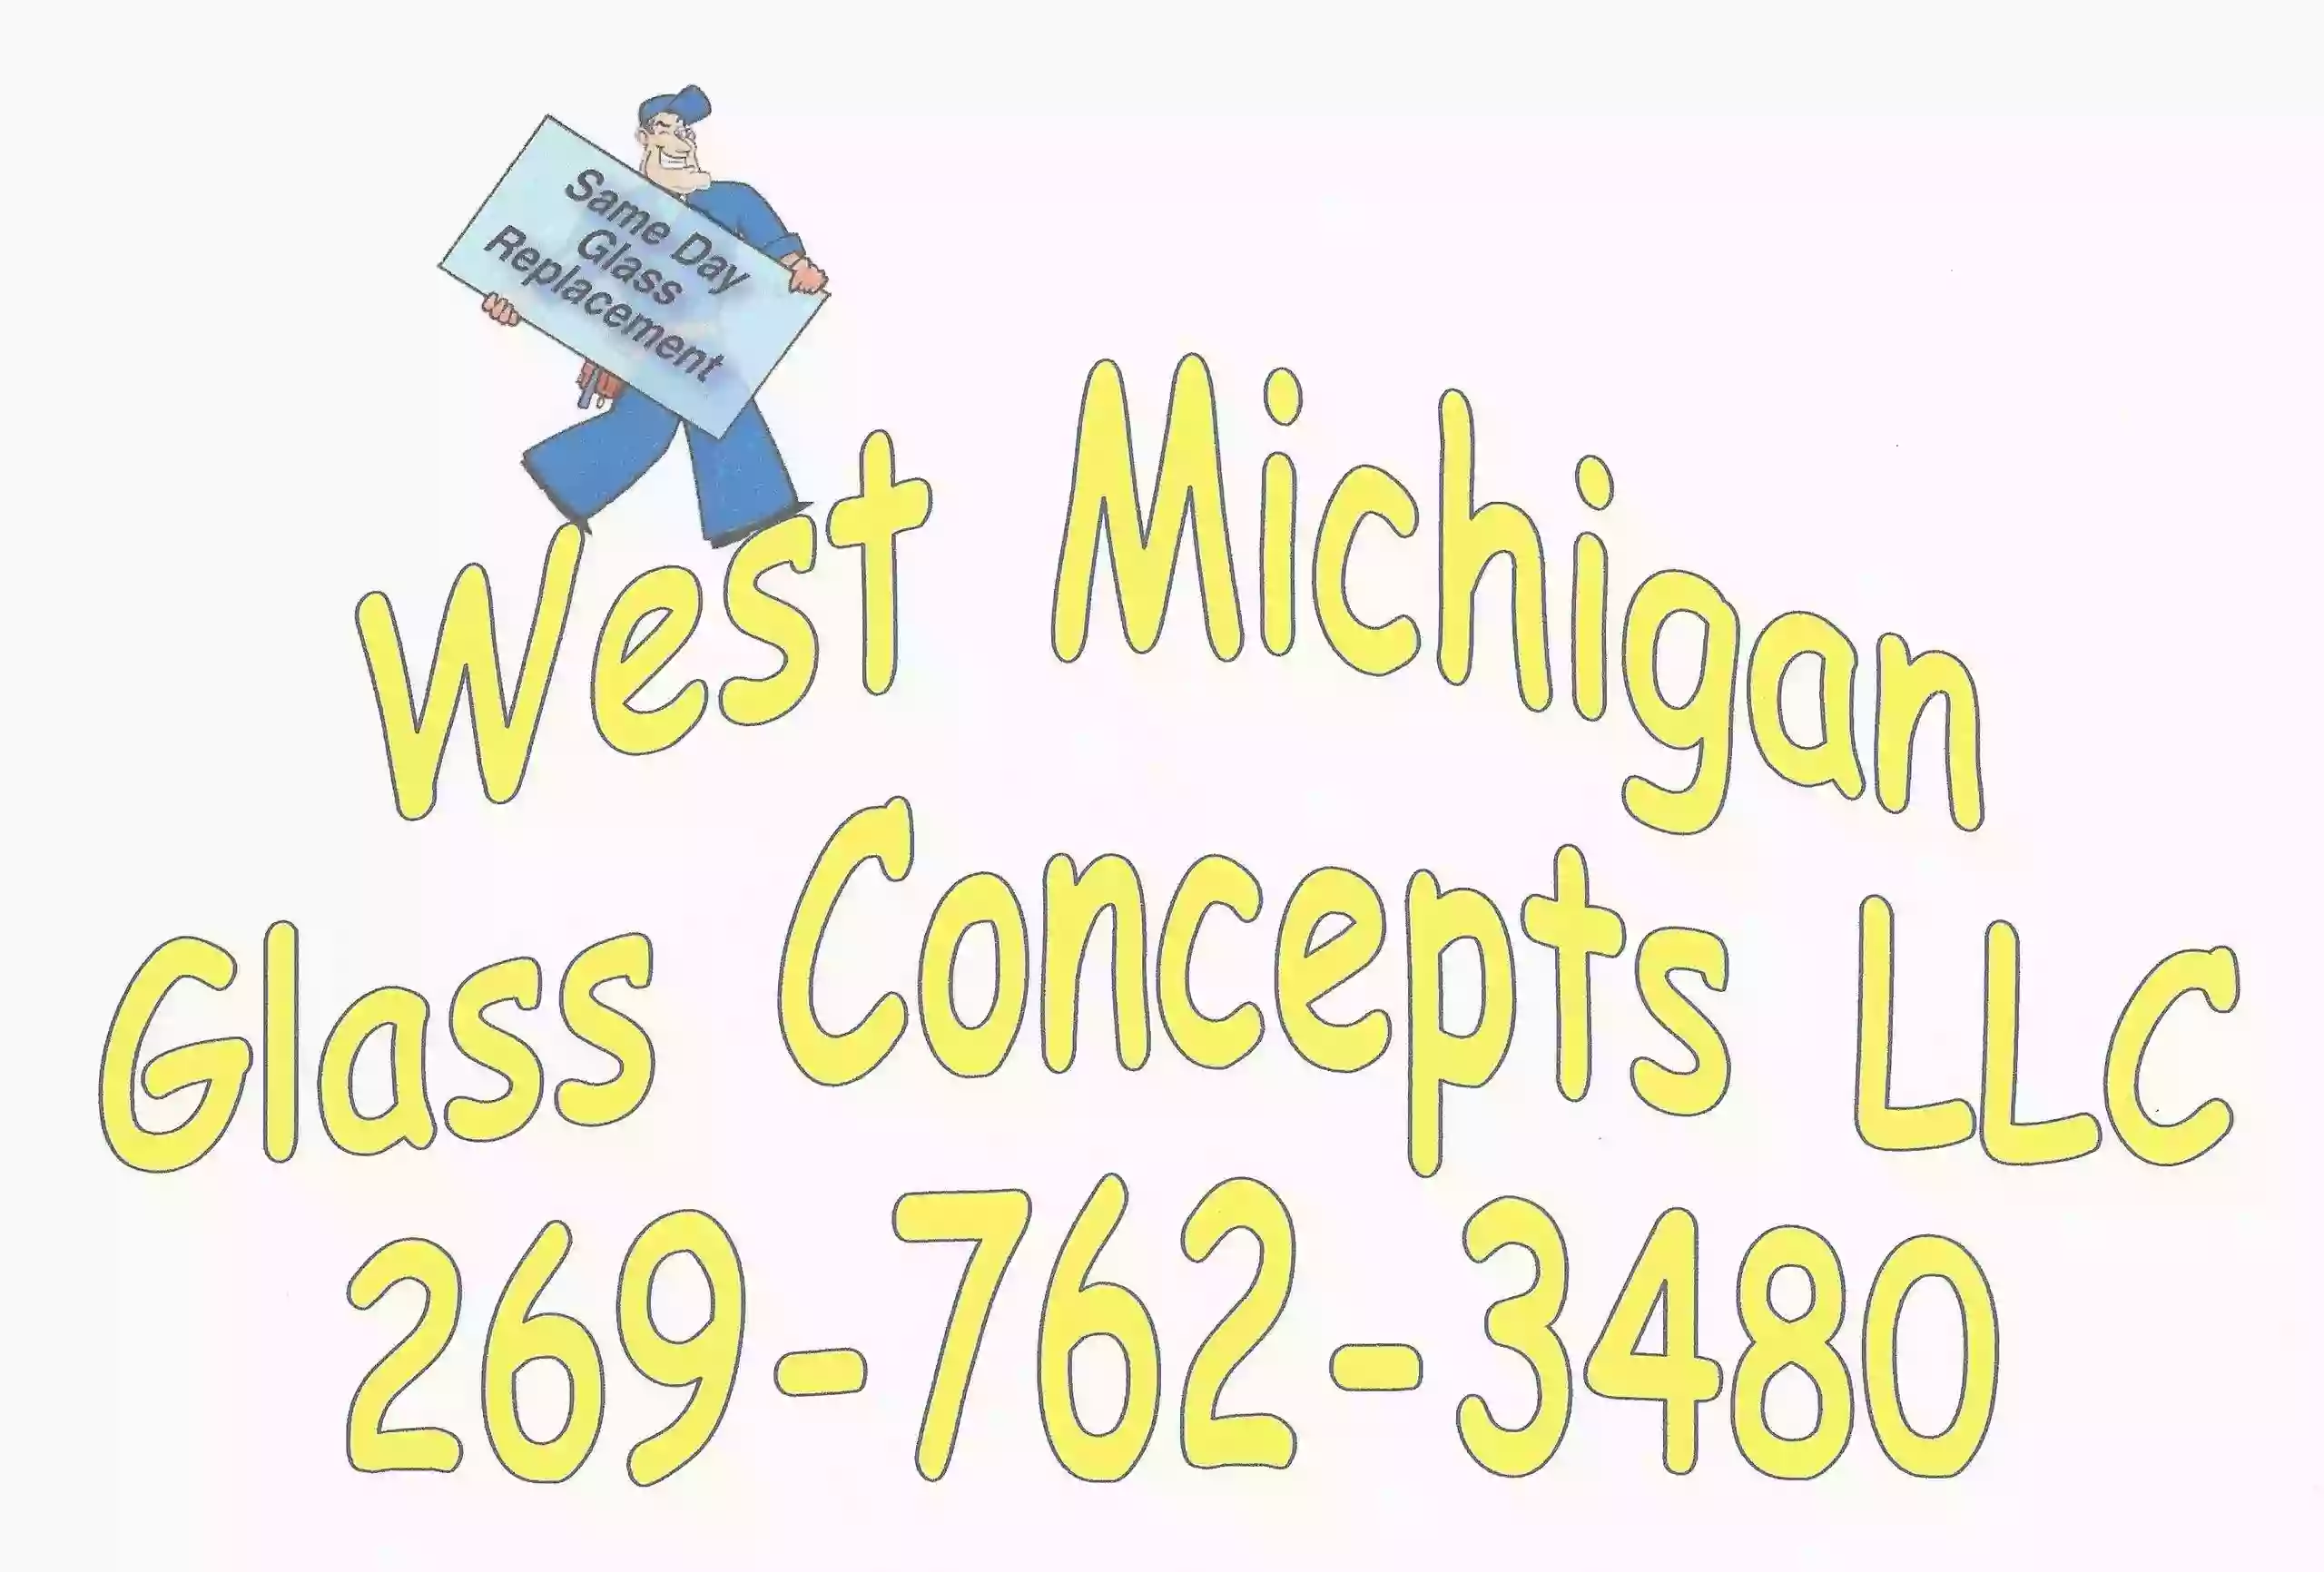 West Michigan Glass Concepts LLC